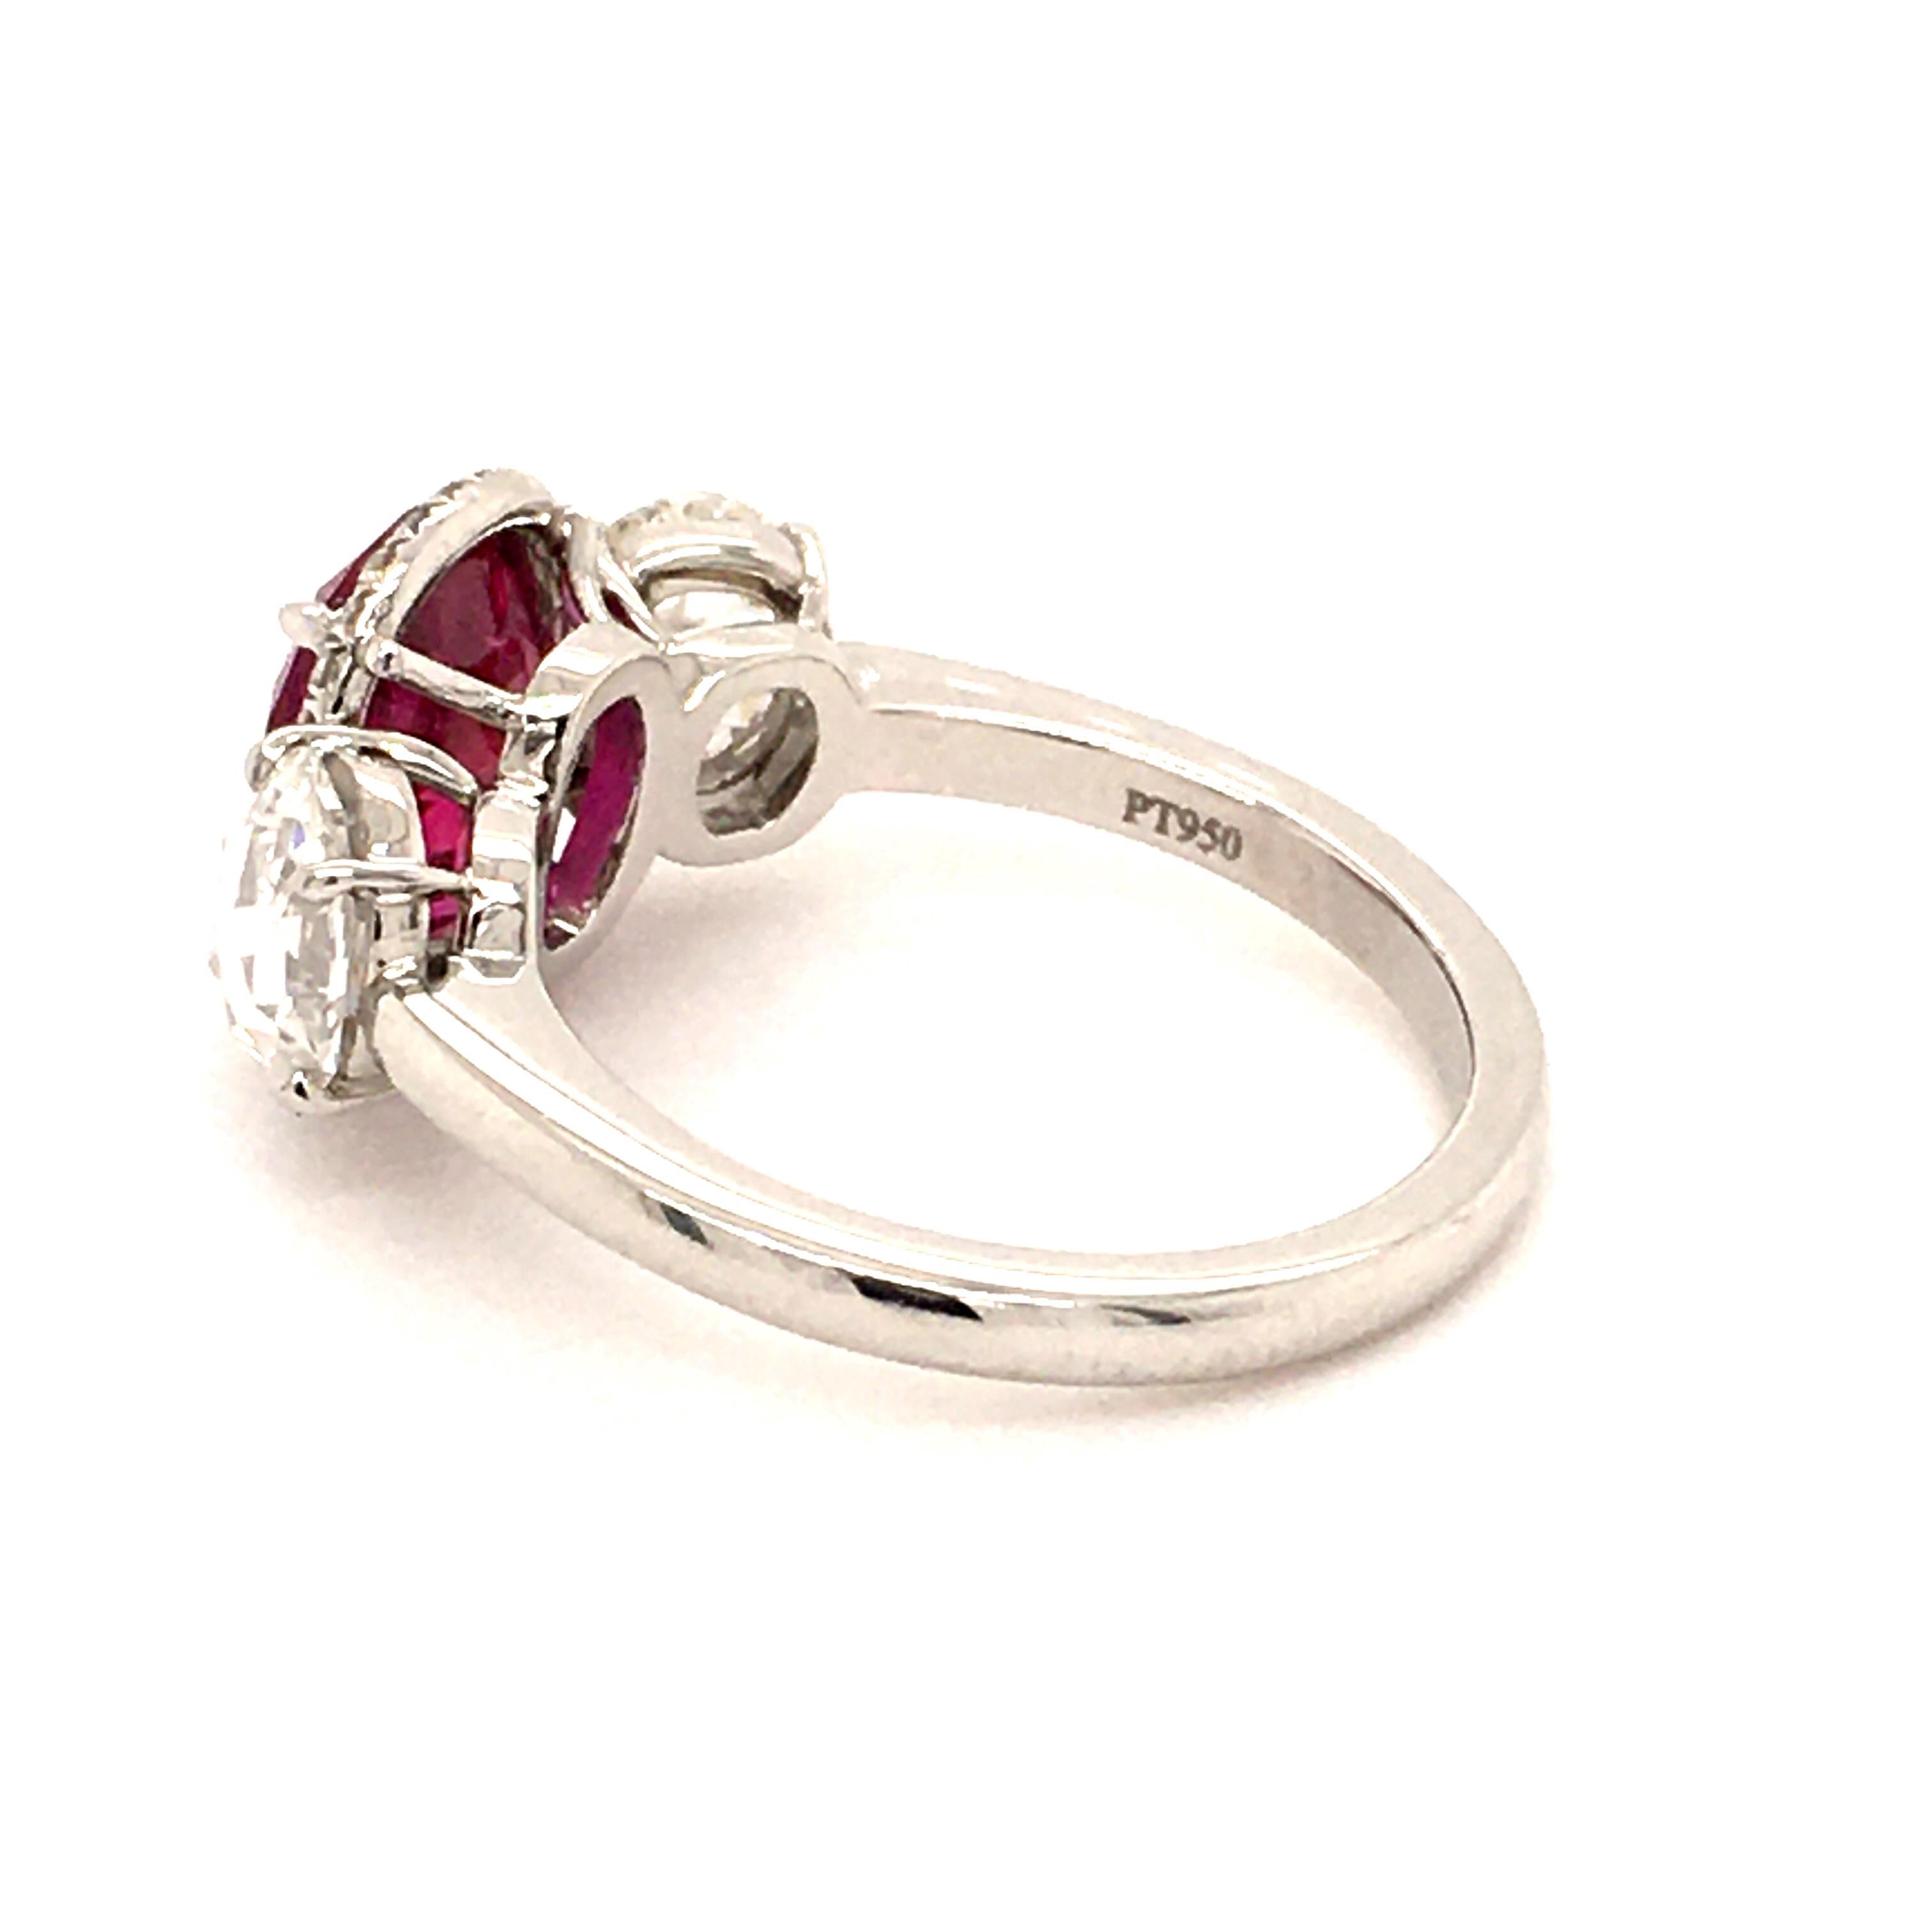 Women's or Men's Superb 2.73 Carat Burma Ruby and Diamond Ring in Platinum 950